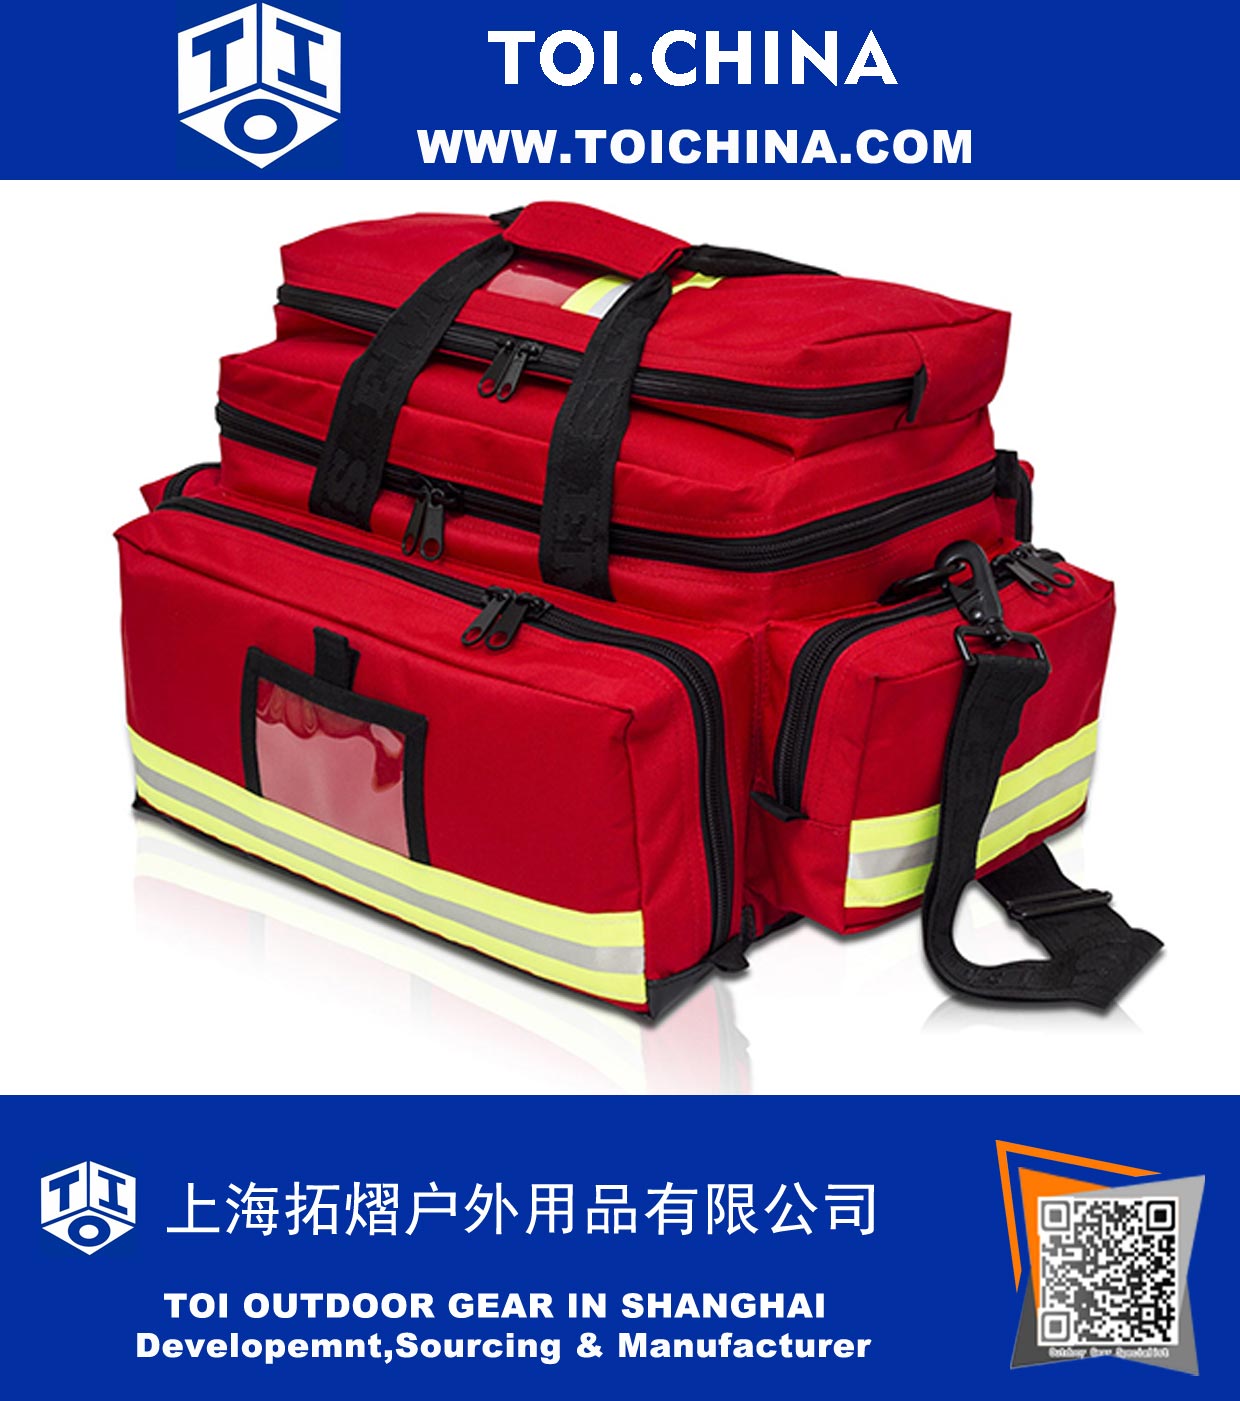 Emergency Large Capacity Red bag